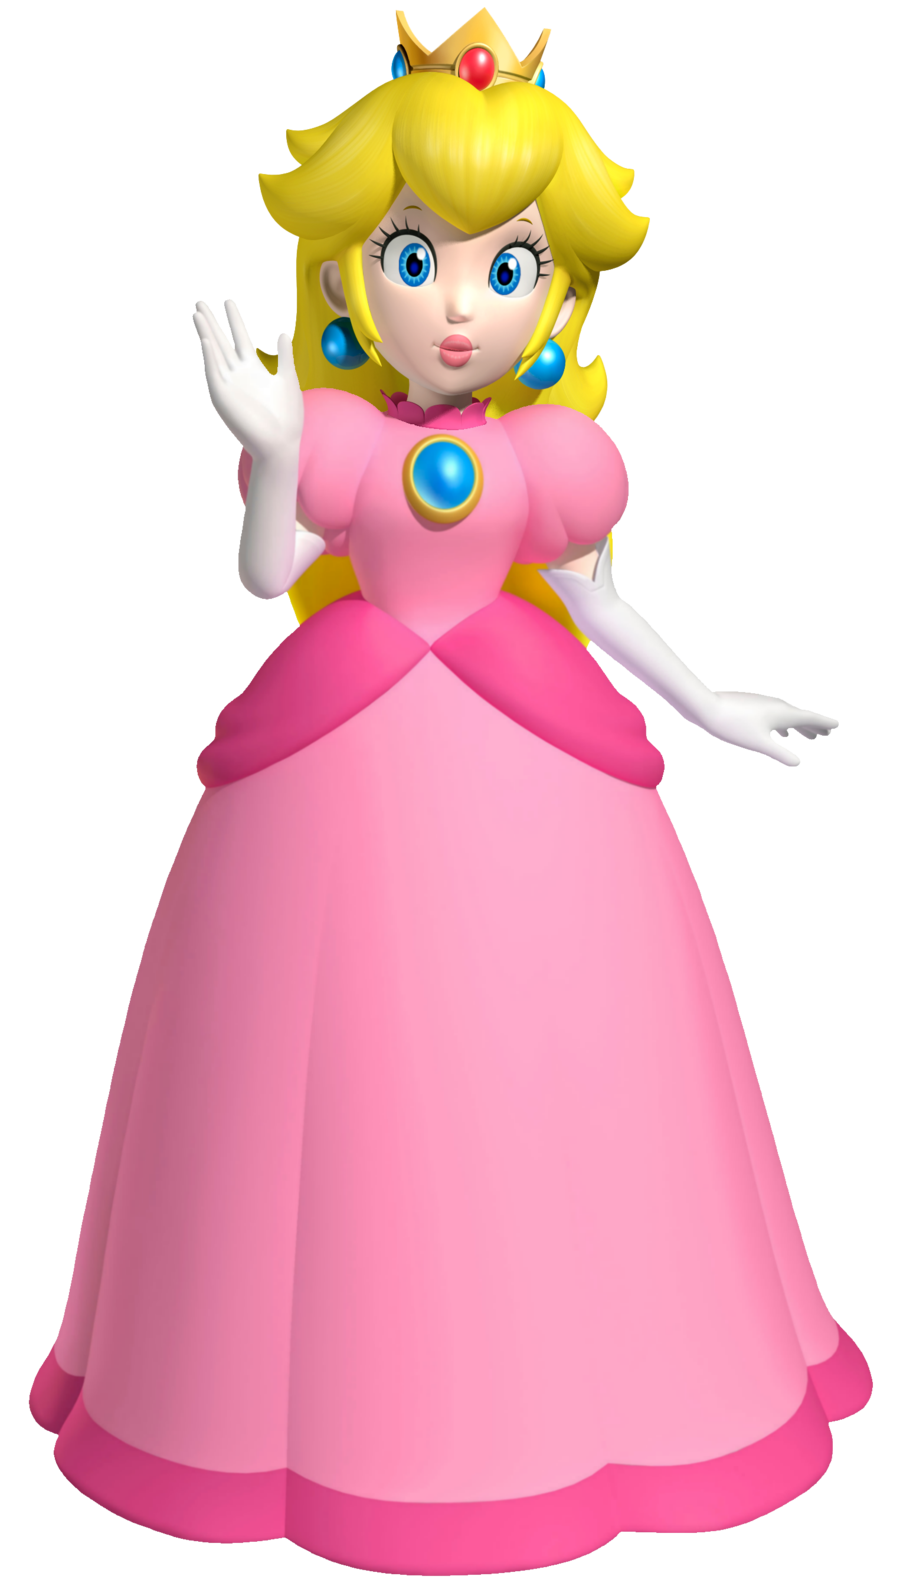 Image result for smiling. Princess clipart princess peach